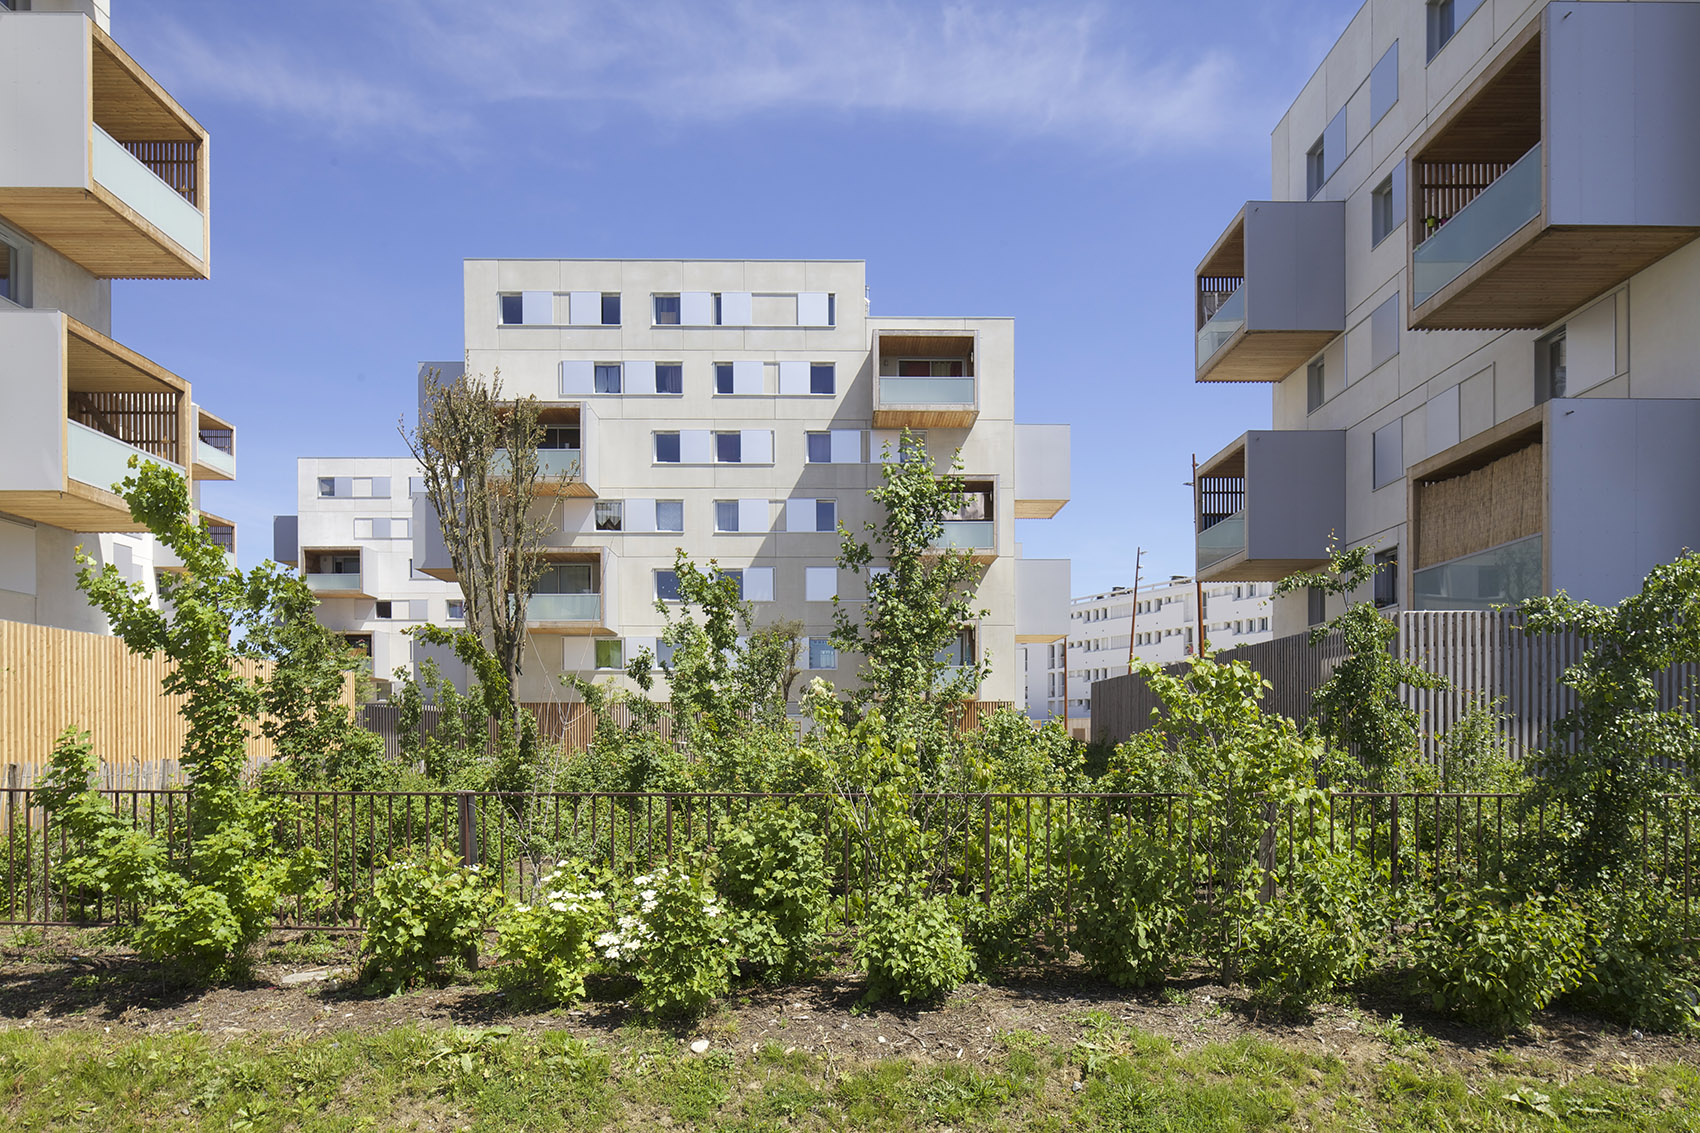 Square Maïmat住宅区更新，法国/释放公共空间，连接社区居民-24